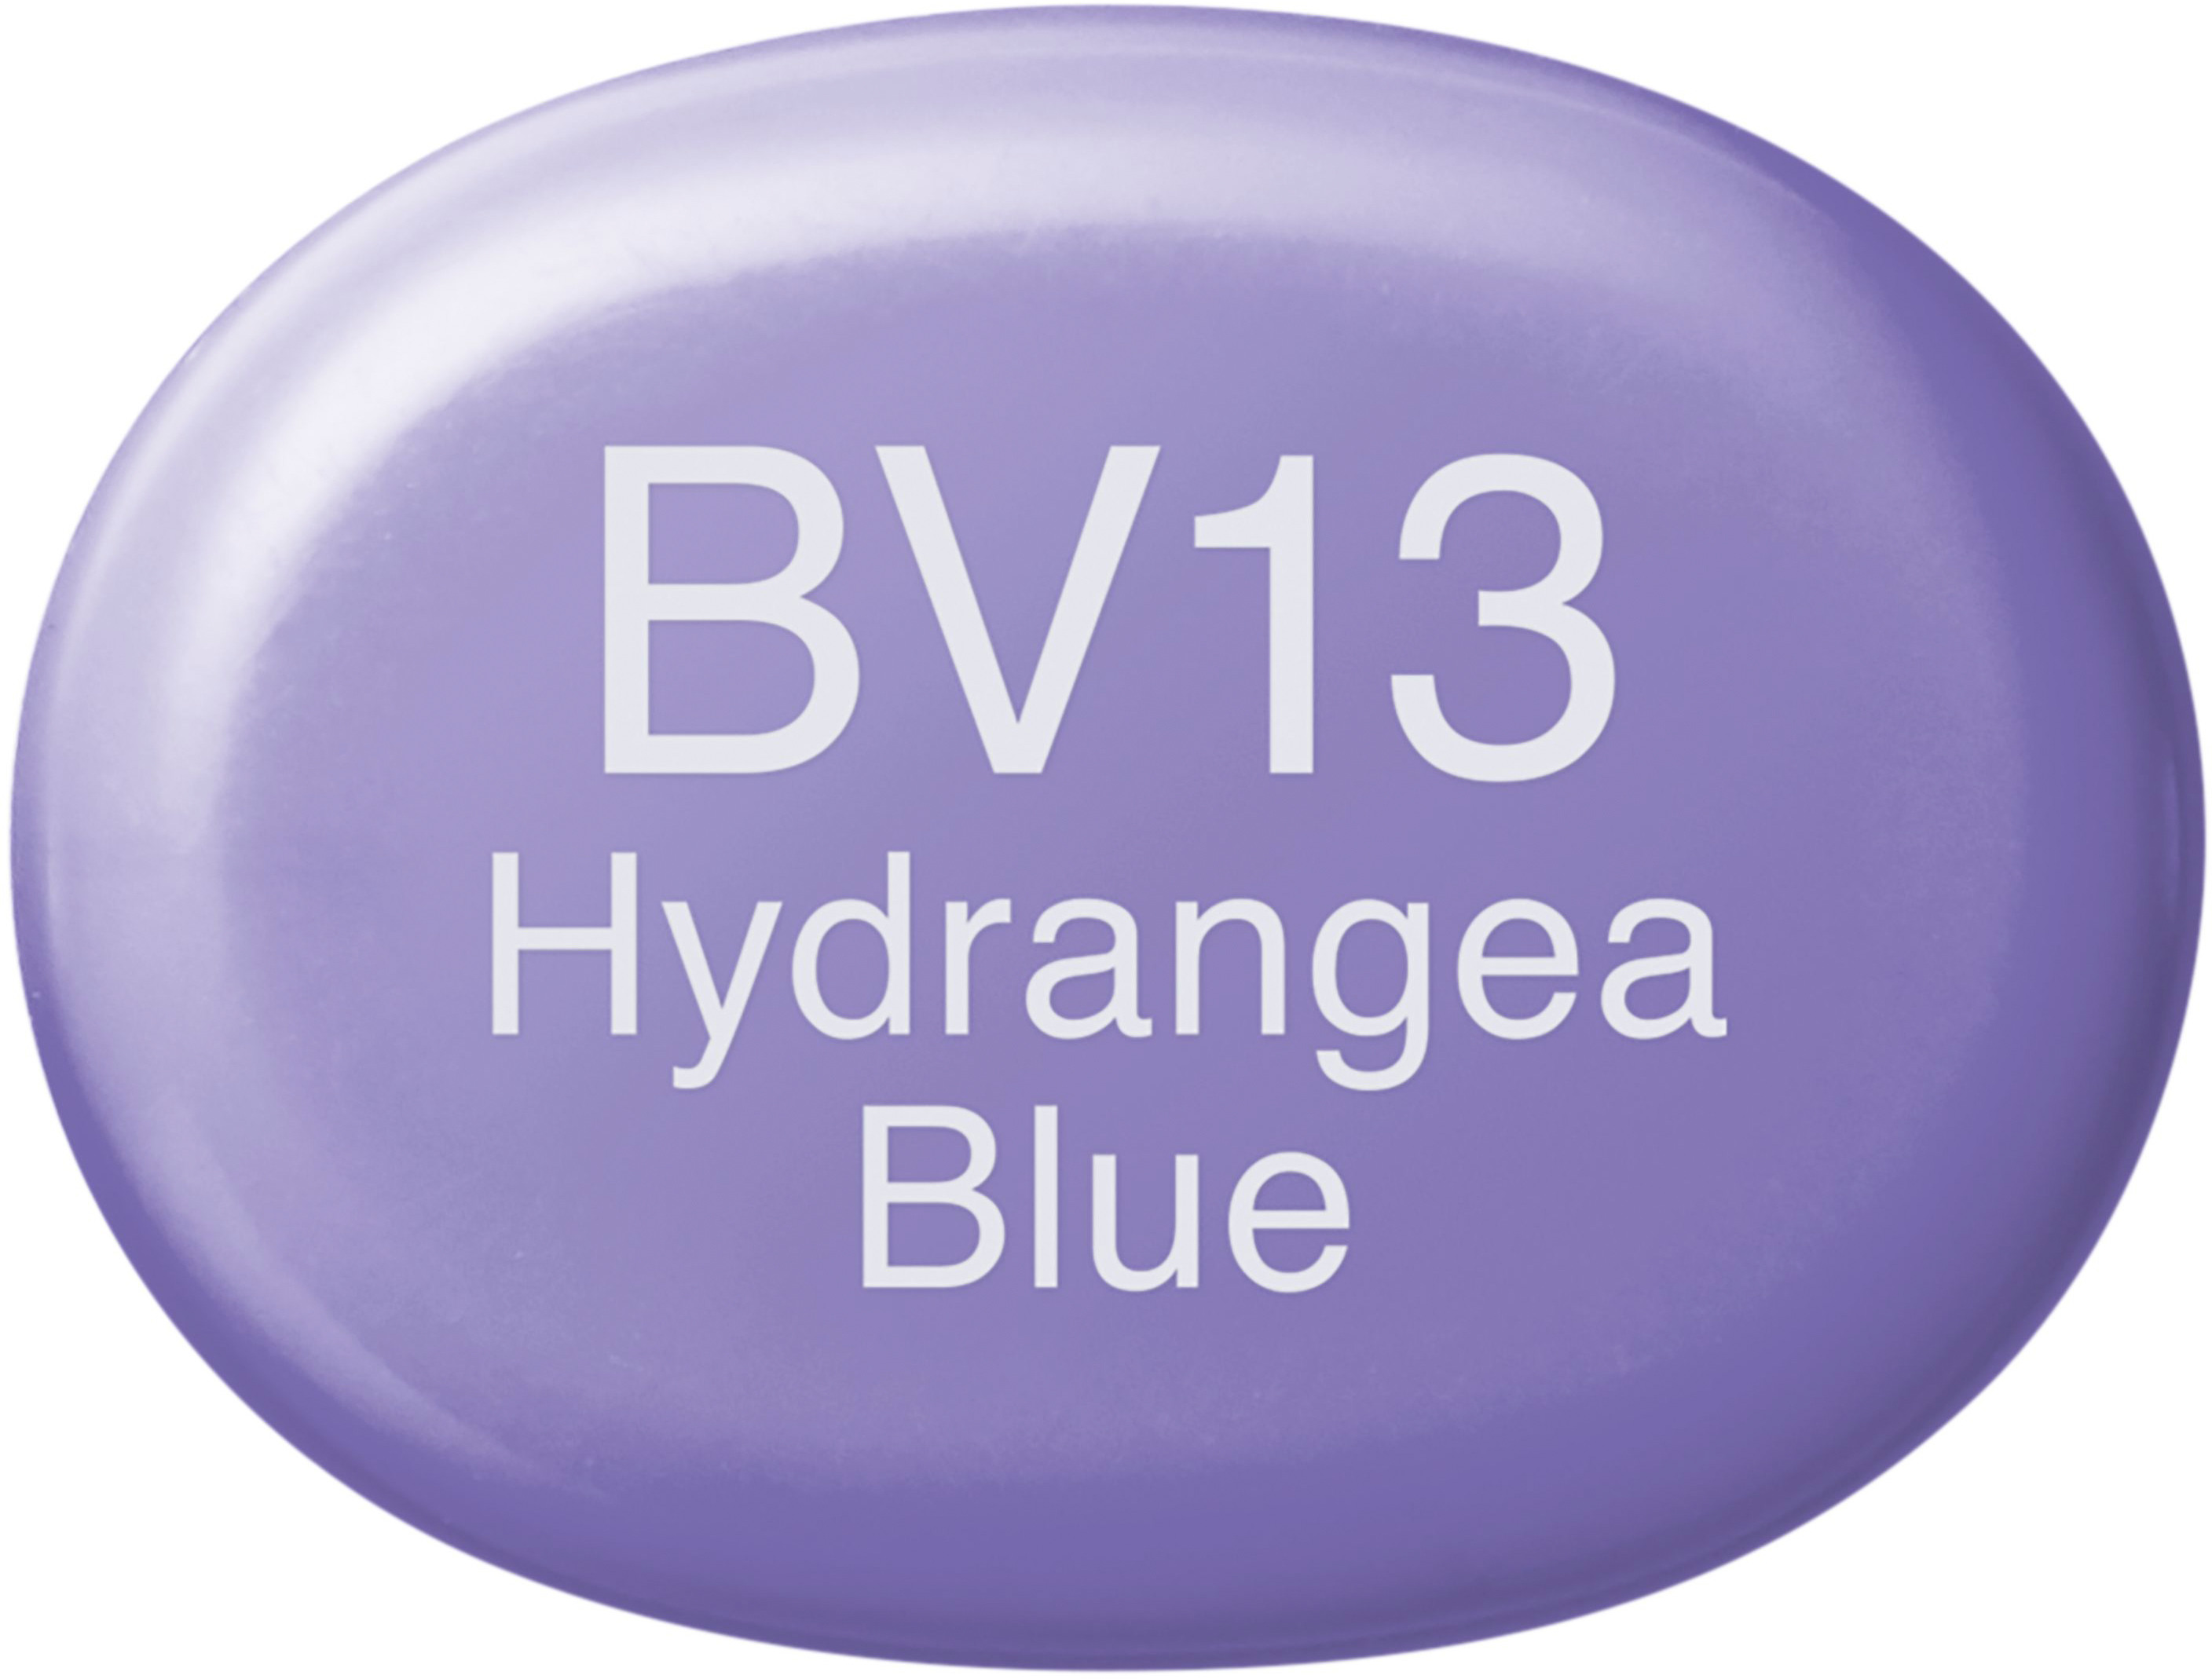 COPIC Marker Sketch 21075166 BV13 - Hydrangea Blue